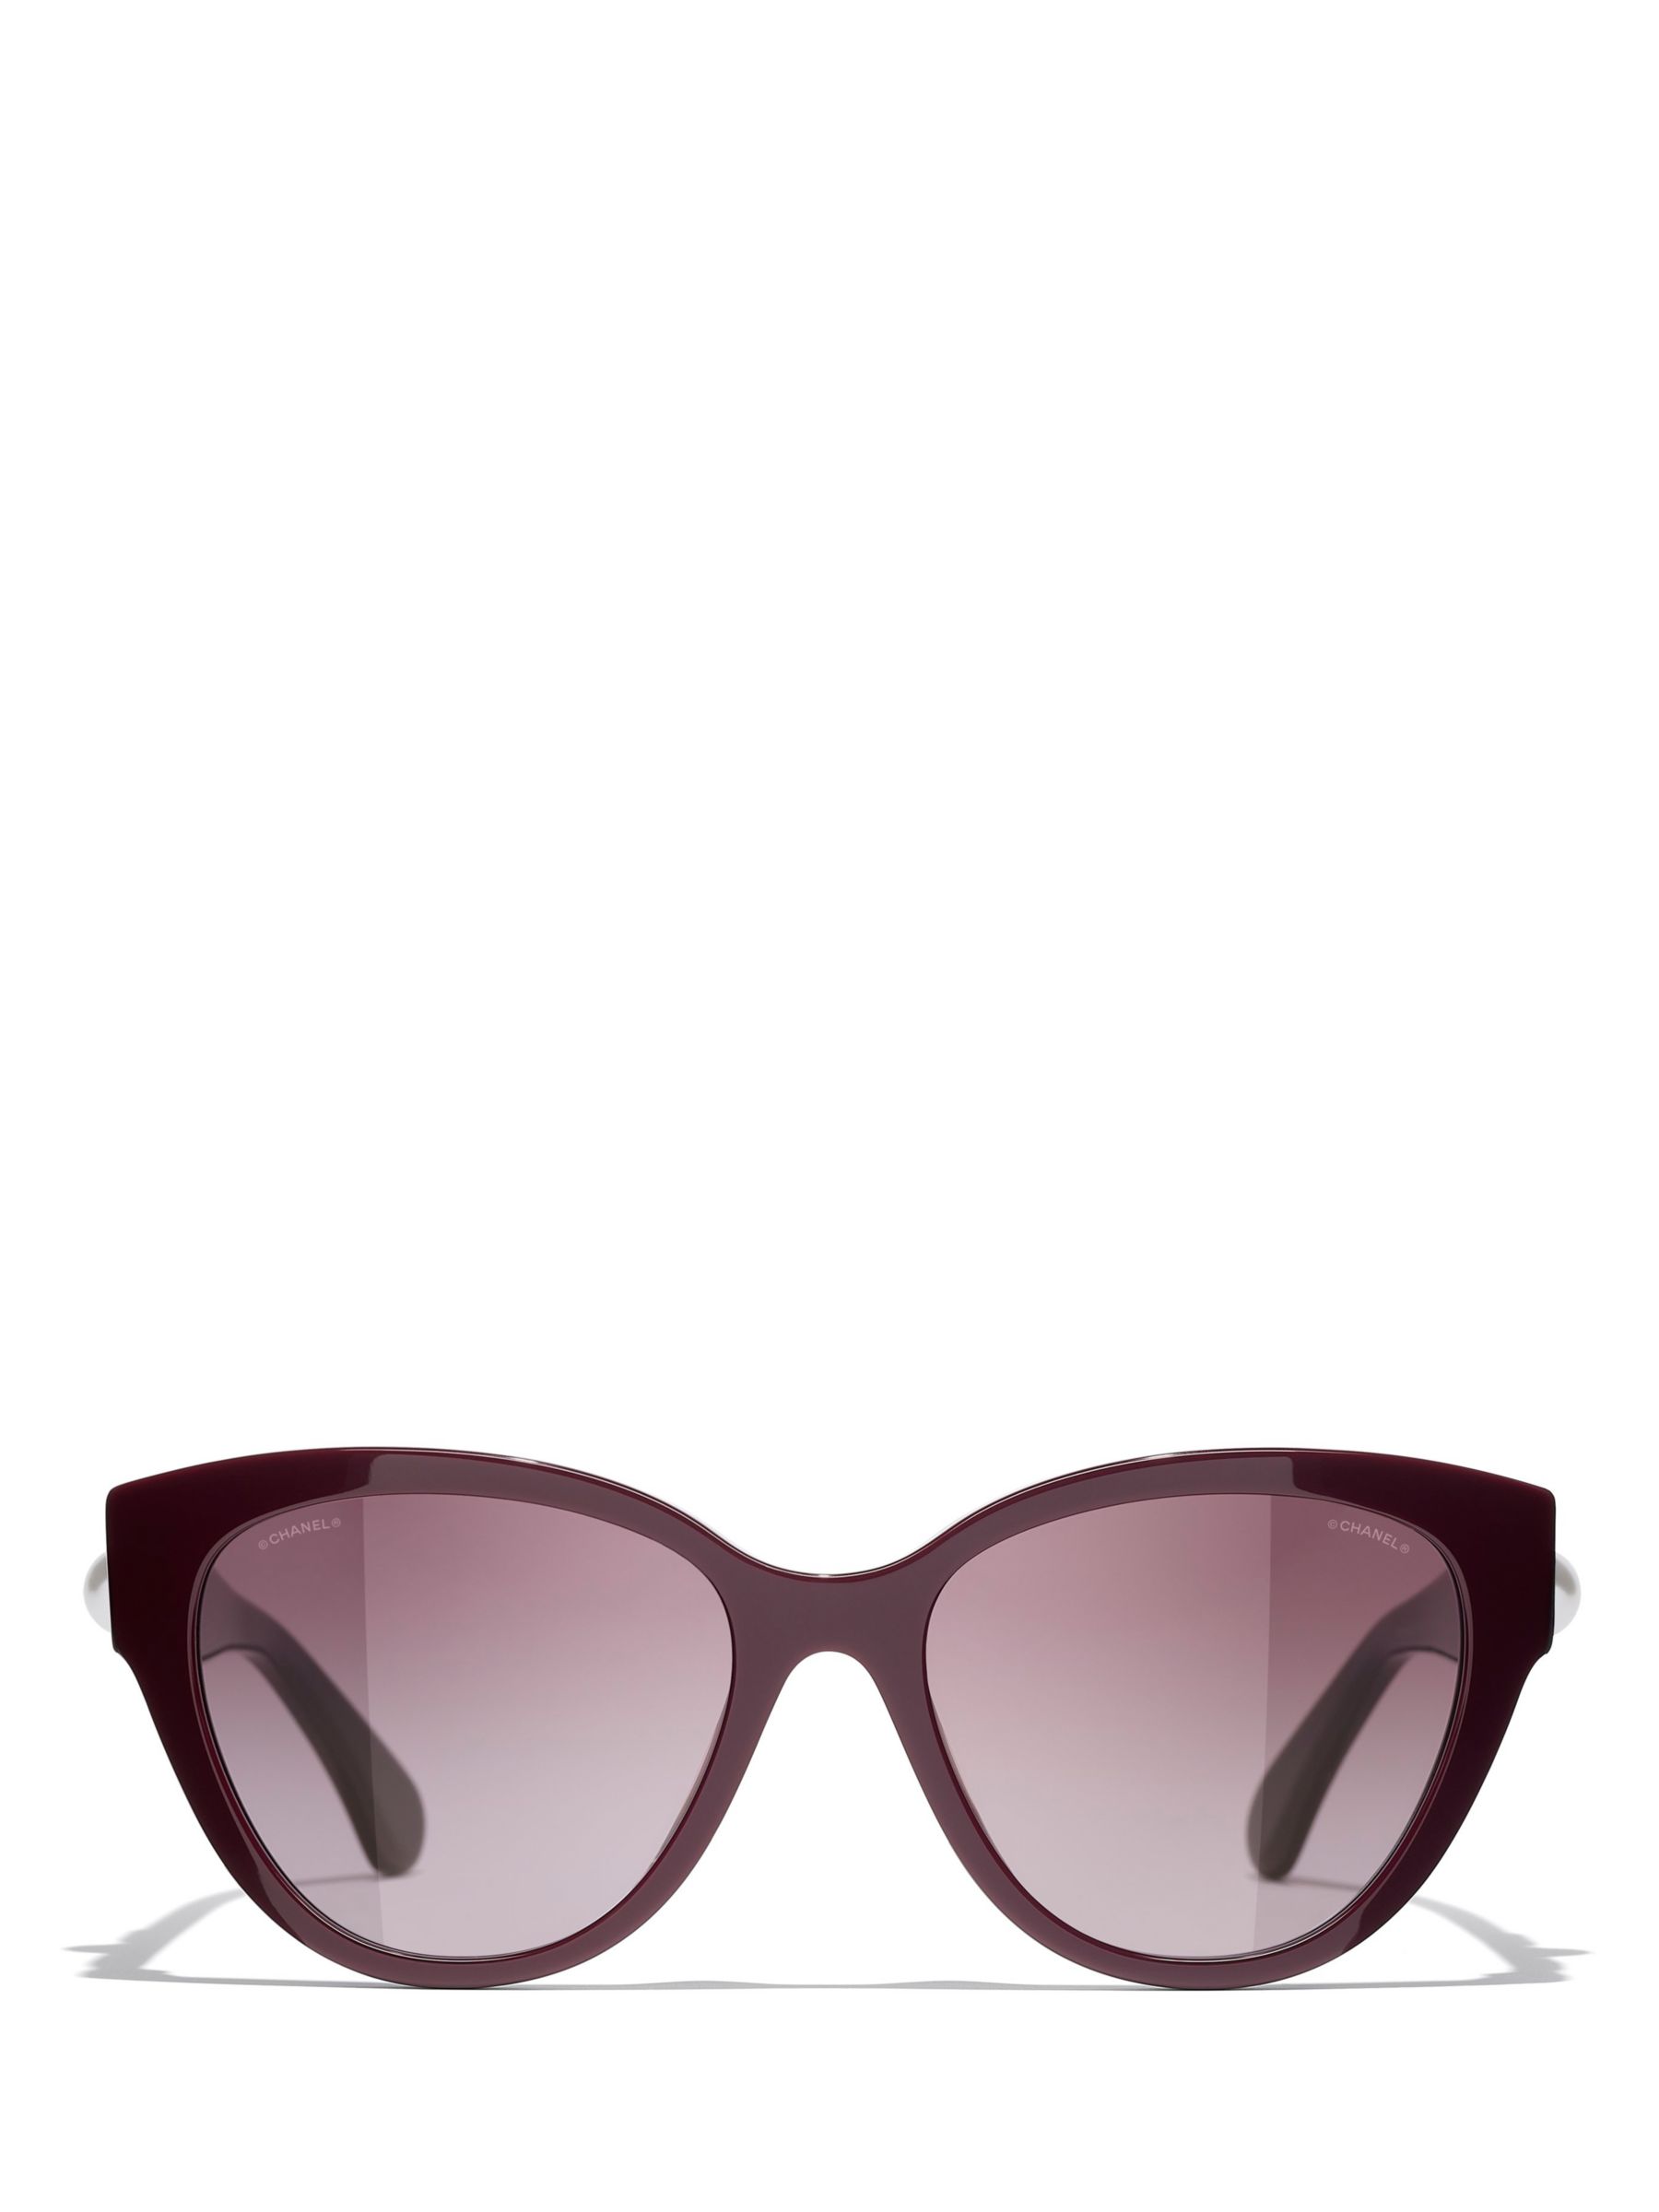 CHANEL CH5477 Women's Cat's Eye Sunglasses, Red - John Lewis